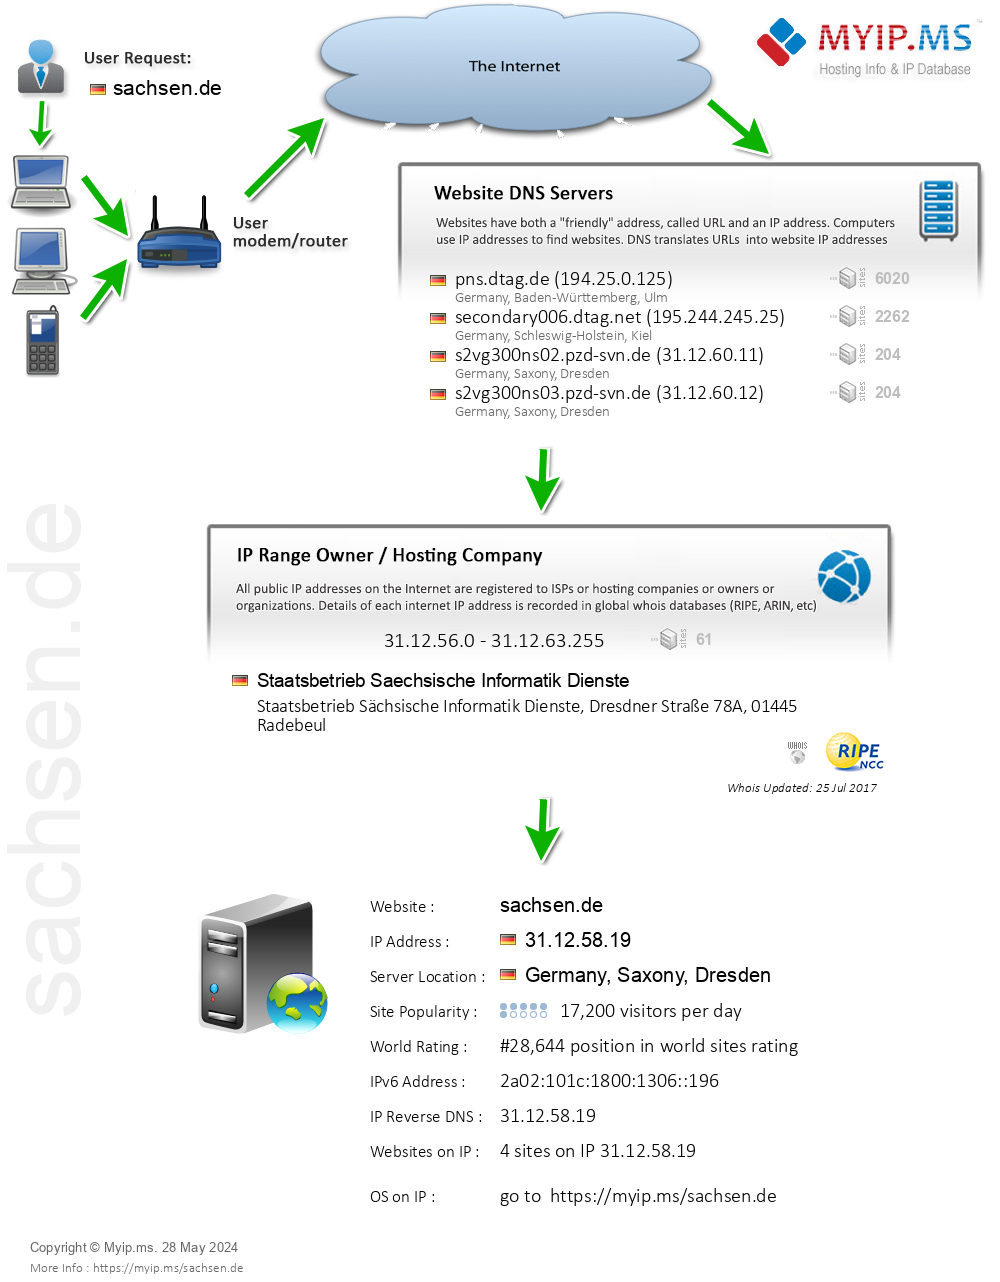 Sachsen.de - Website Hosting Visual IP Diagram